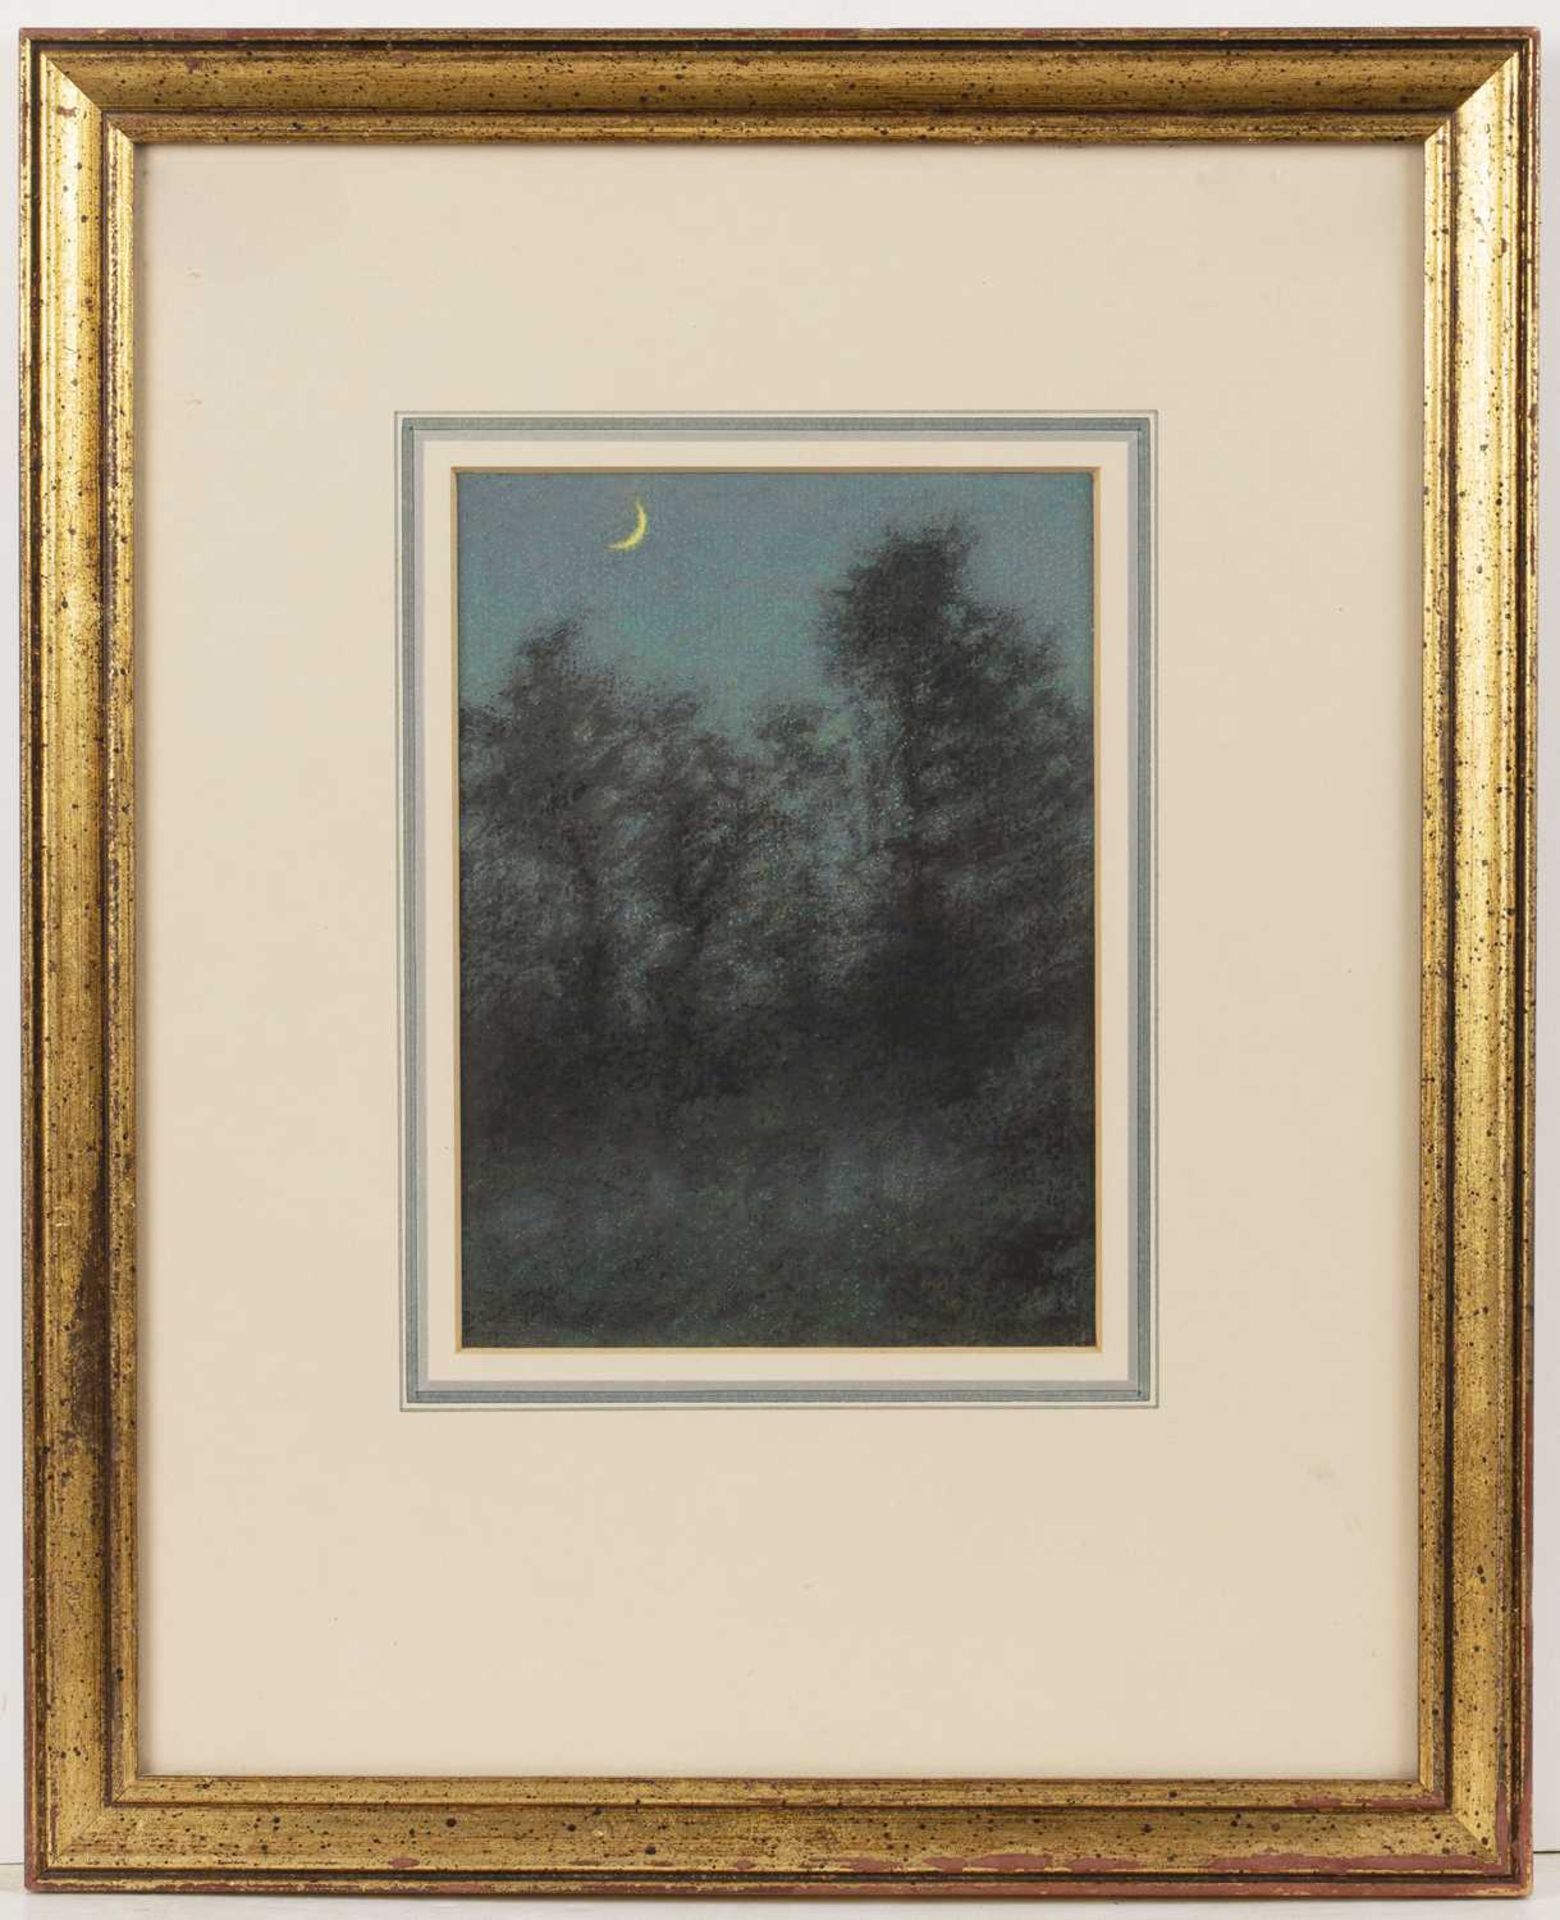 Herbert Dalziel (1858-1941) The Crescent Moon, pastel, 20 x 14cm - Image 2 of 3